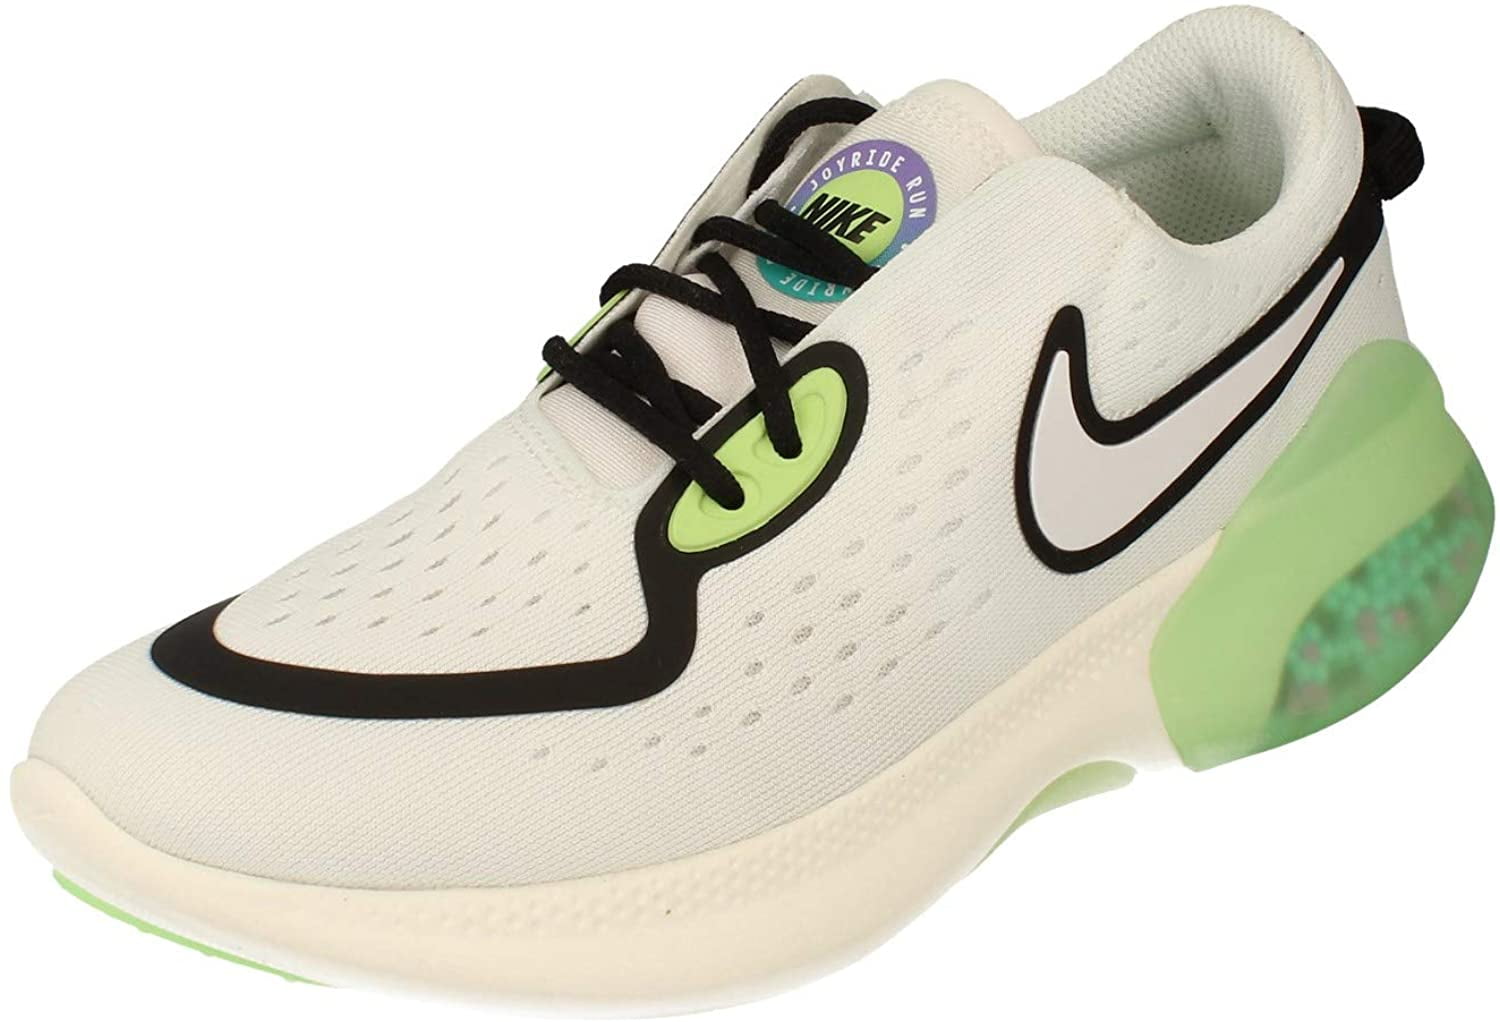 Nike Womens Joyride Dual Trainers CD4363 Sneakers Shoes (UK 3.5 US 6 EU 36.5, White Black Vapor Green 105) - Walmart.com